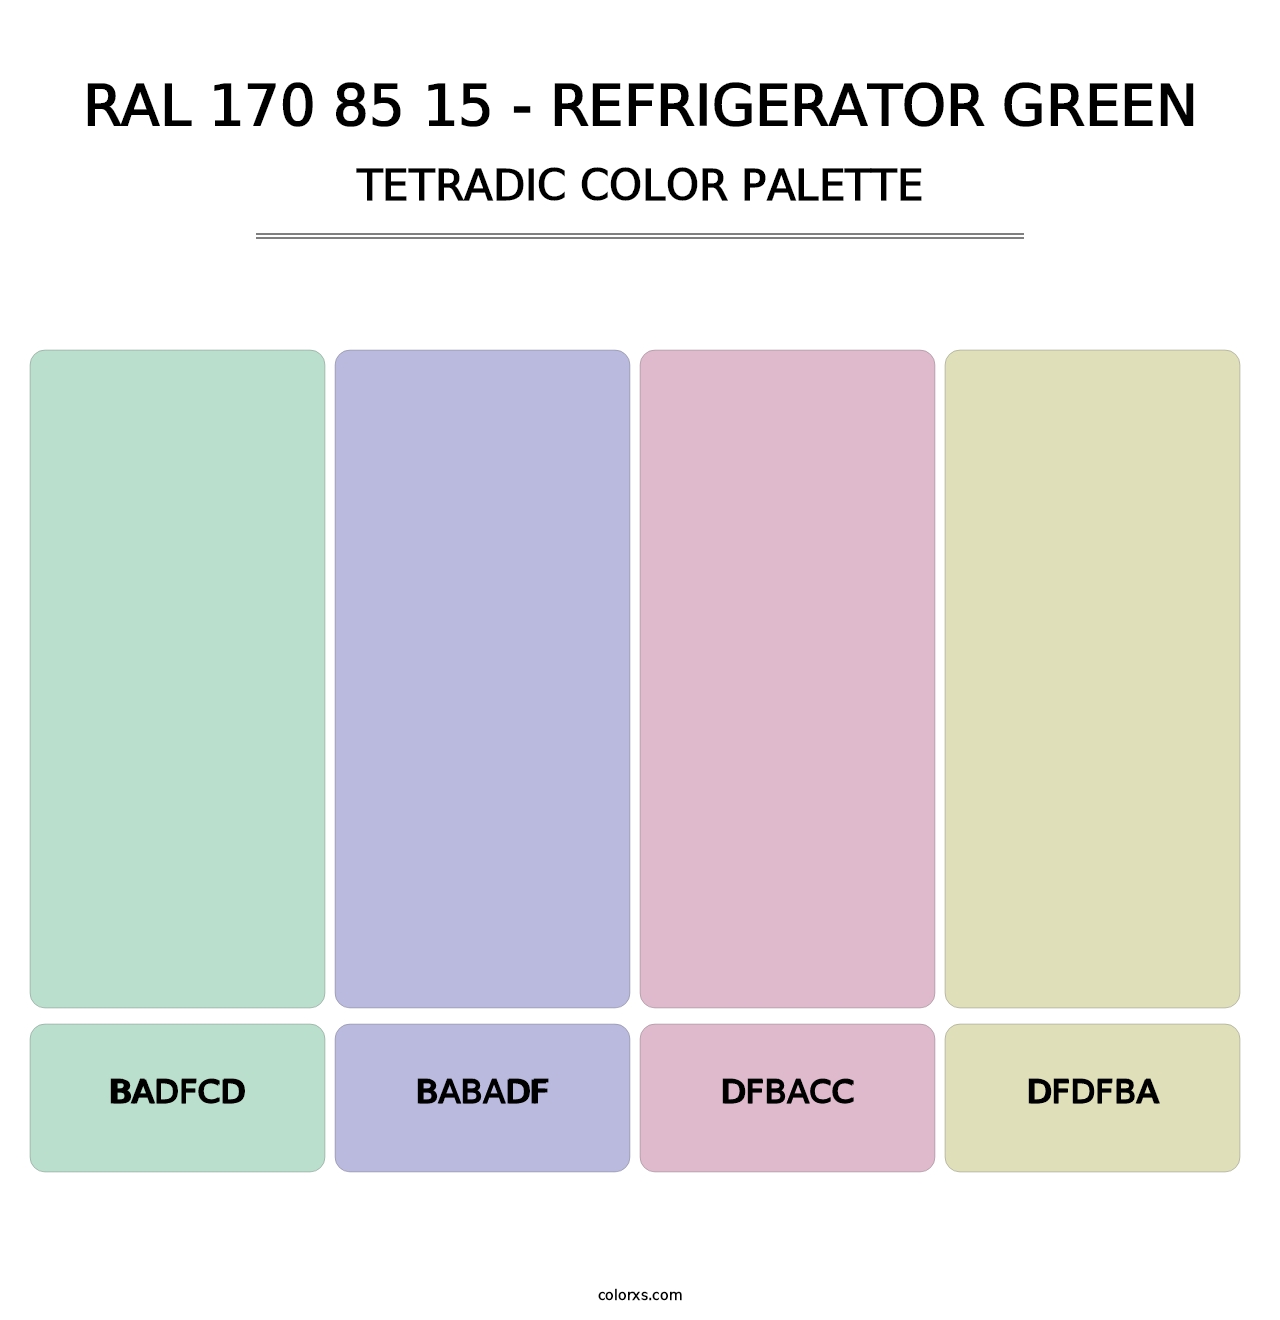 RAL 170 85 15 - Refrigerator Green - Tetradic Color Palette